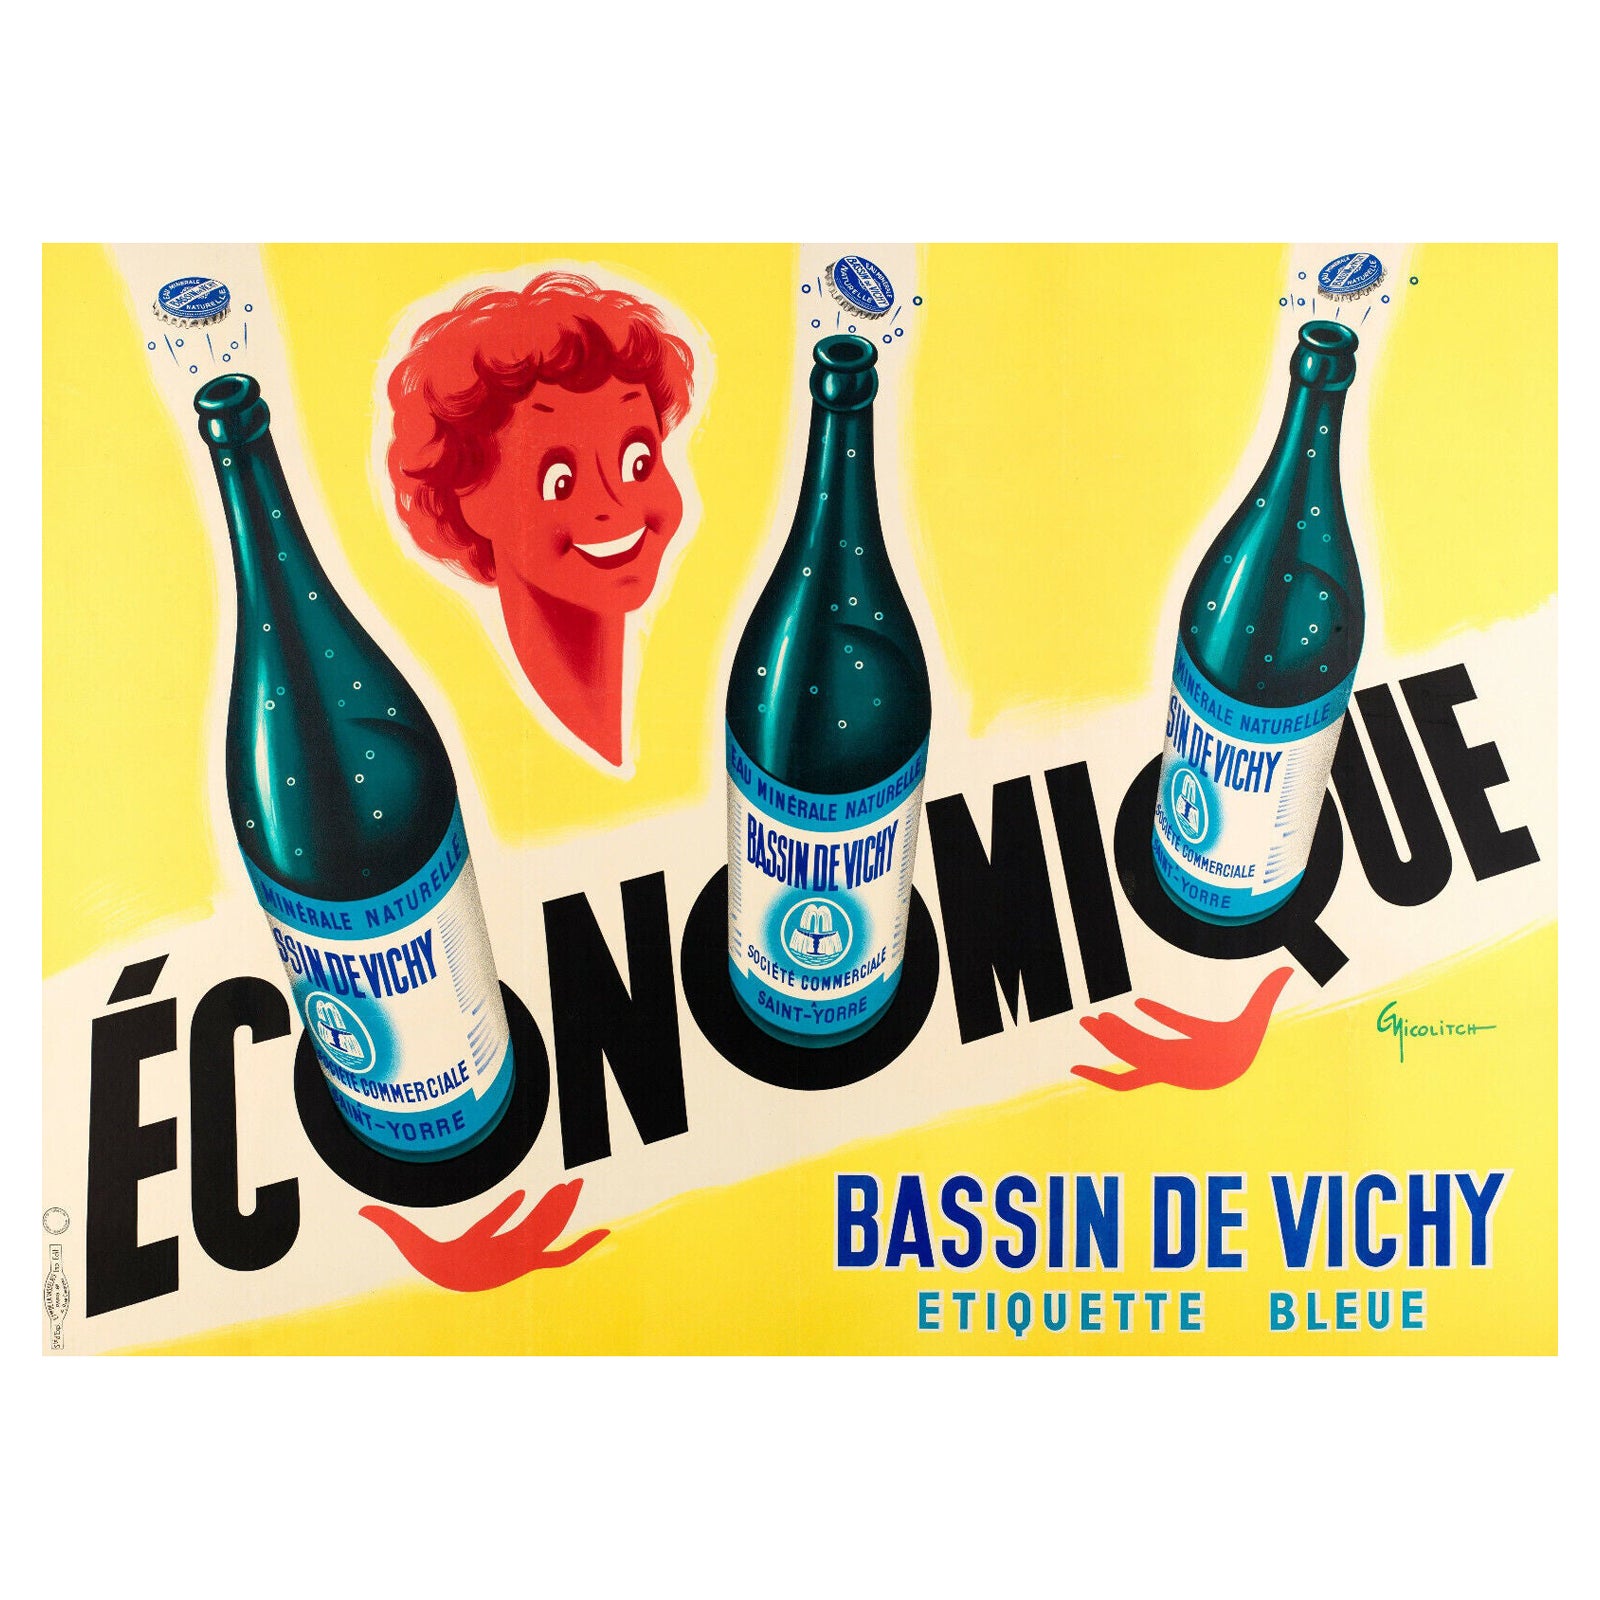 Original Vintage Poster-G. Nicolitch-Vichy Saint-Yorre-Mineral Water, 1953 For Sale